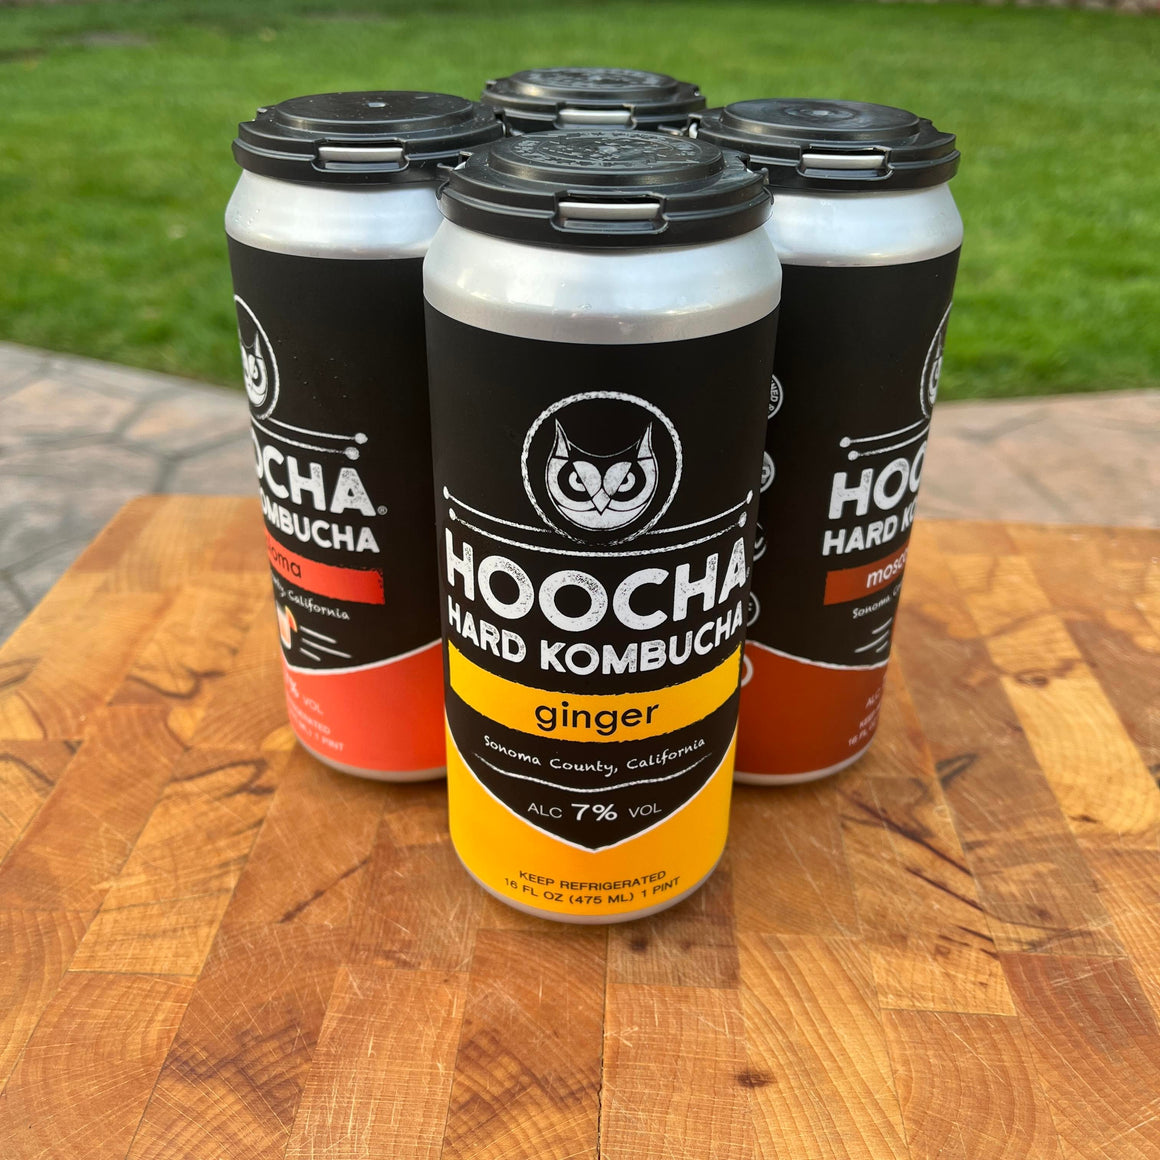 Hoocha Variety 4-Pack, 16 oz. Cans